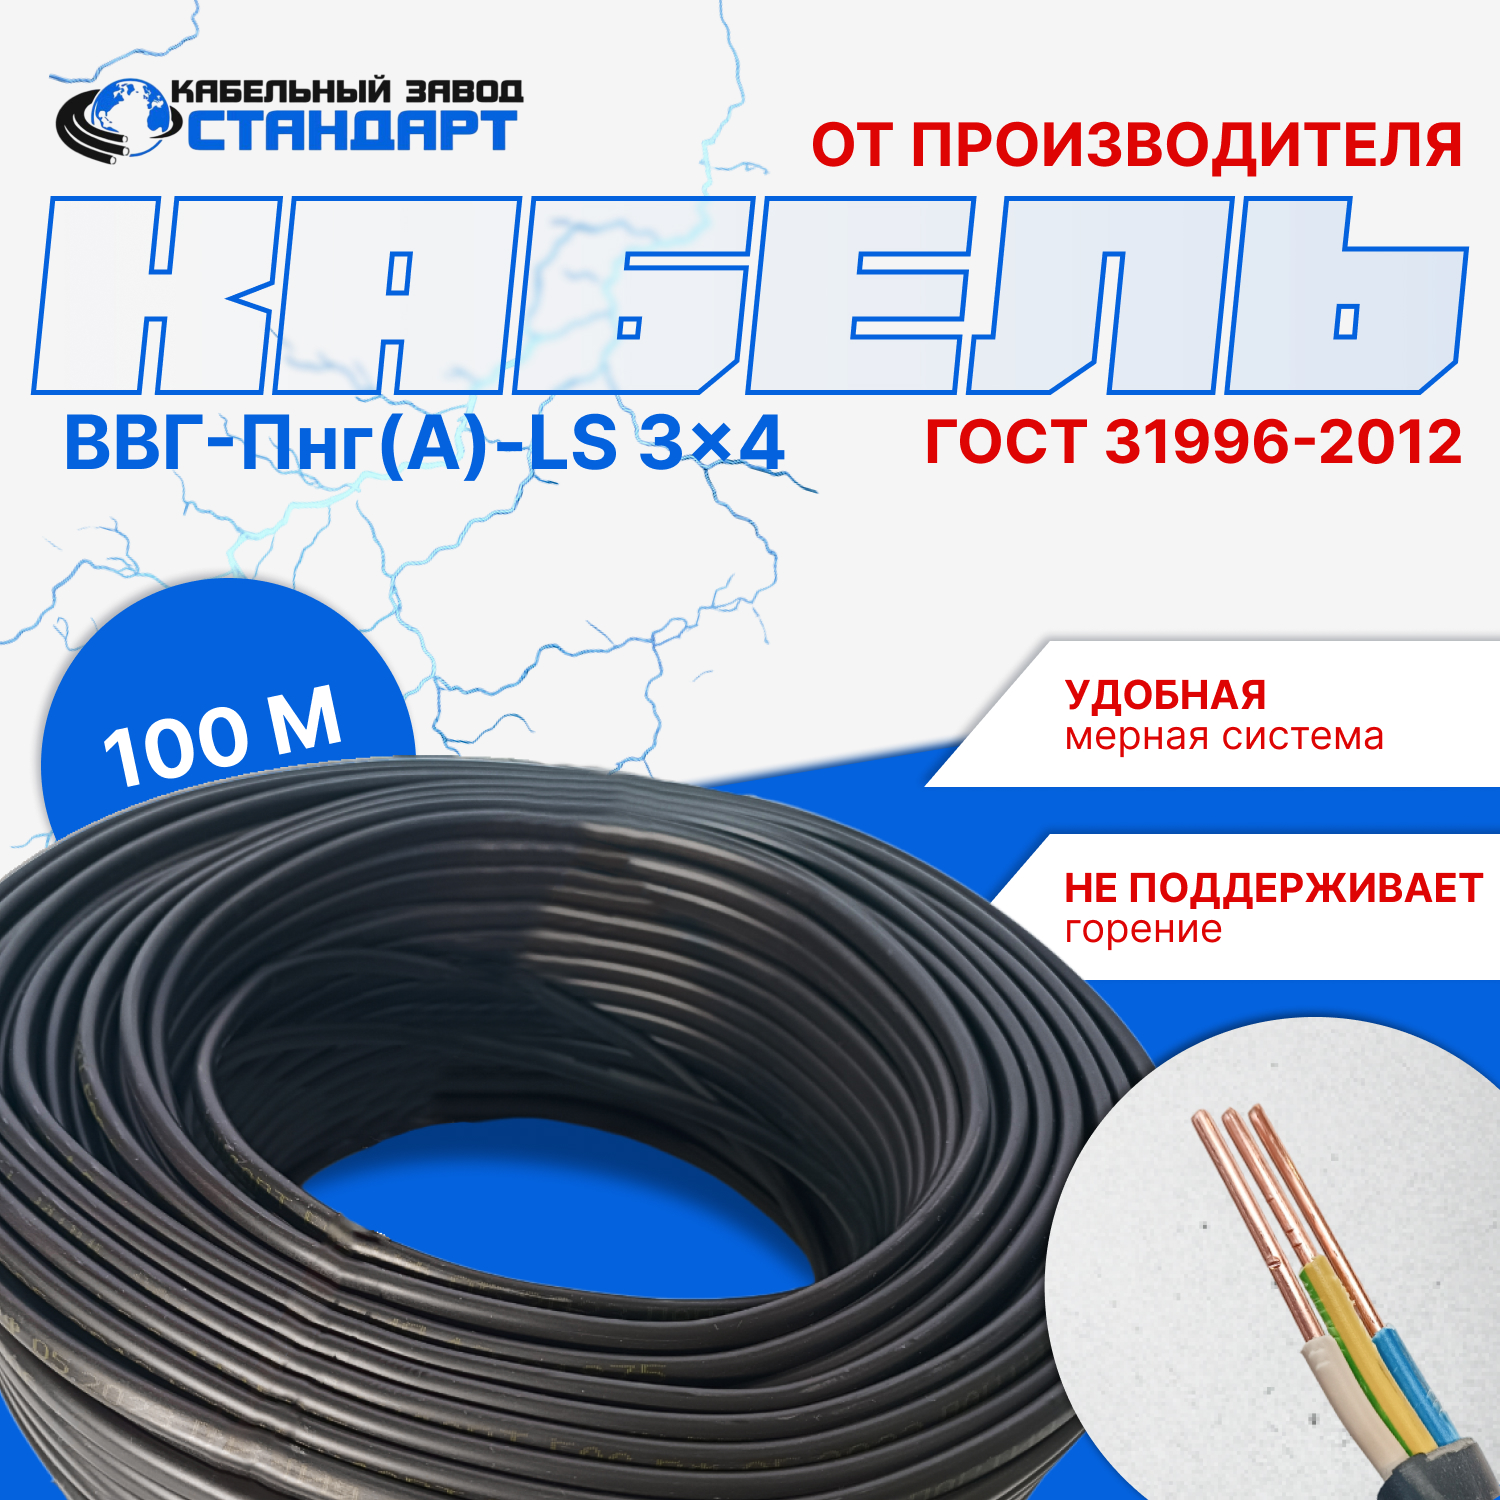 фото Силовой кабель кз стандарт ввг-пнг(а)-ls 3х4ок-0,66 плоский гост 31996-2012 бухта 100м